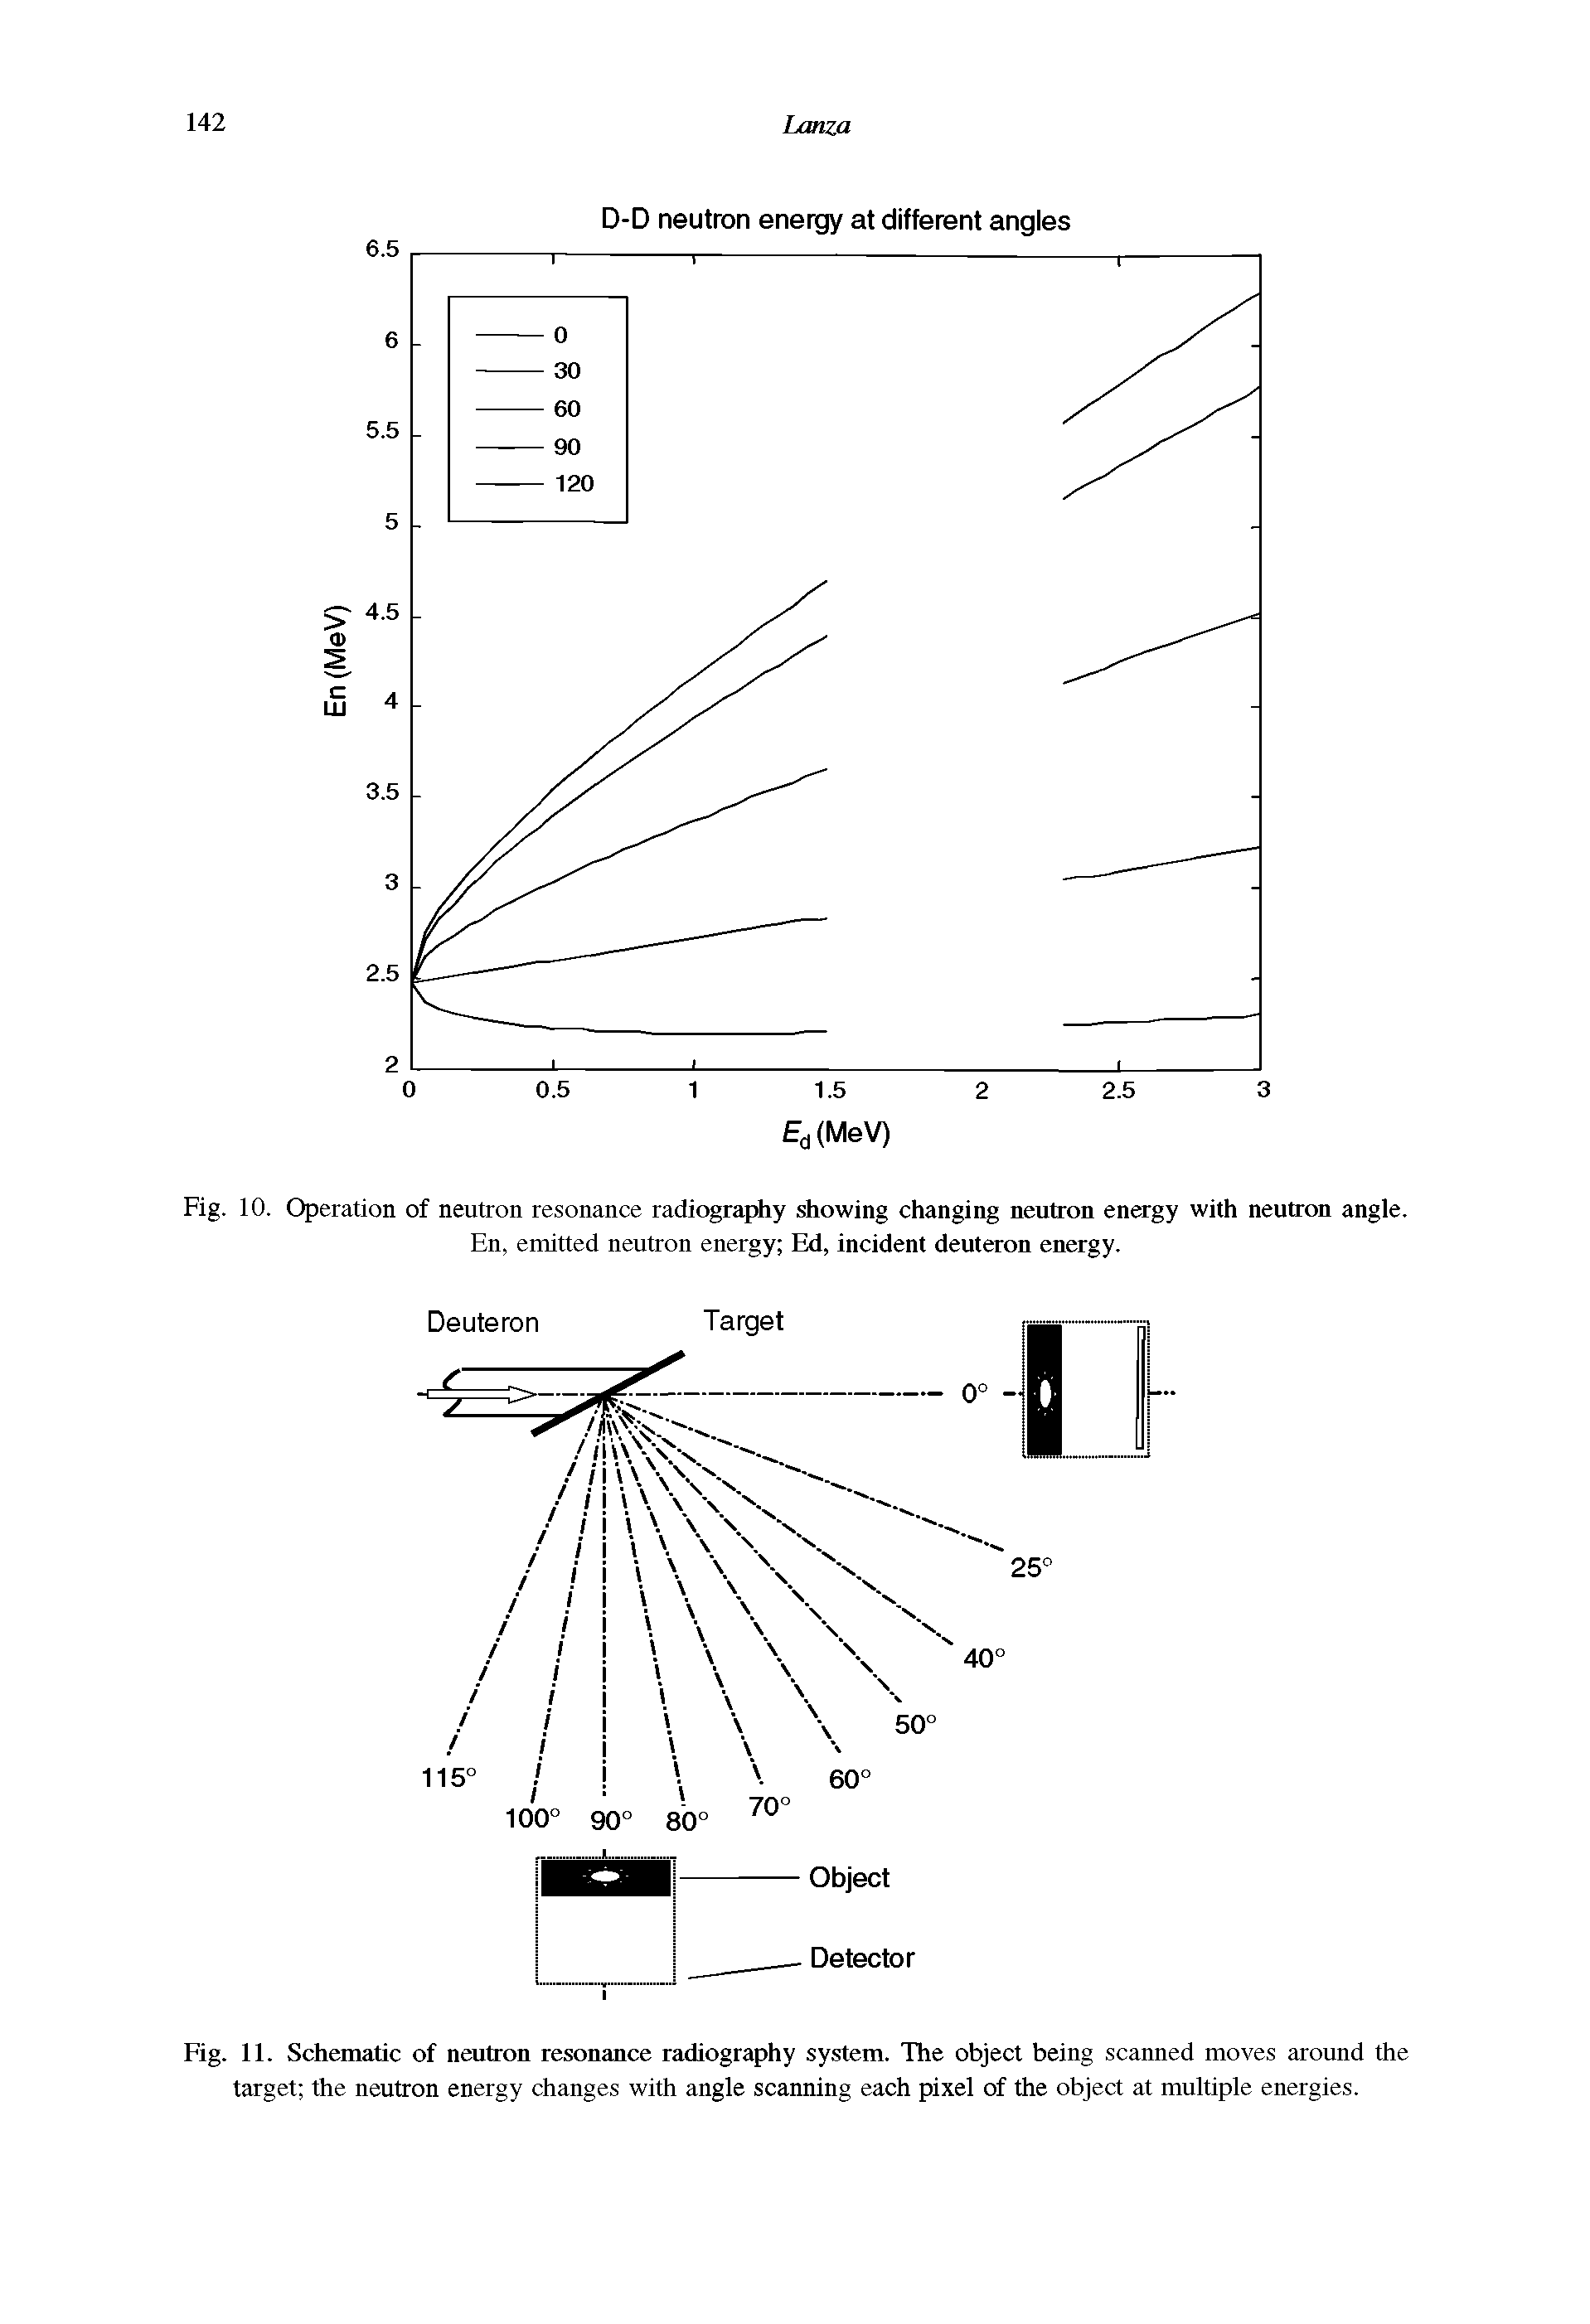 Fig. 10. Operation of neutron resonance radiography showing changing neutron energy with neutron angle. En, emitted neutron energy Ed, incident deuteron energy.